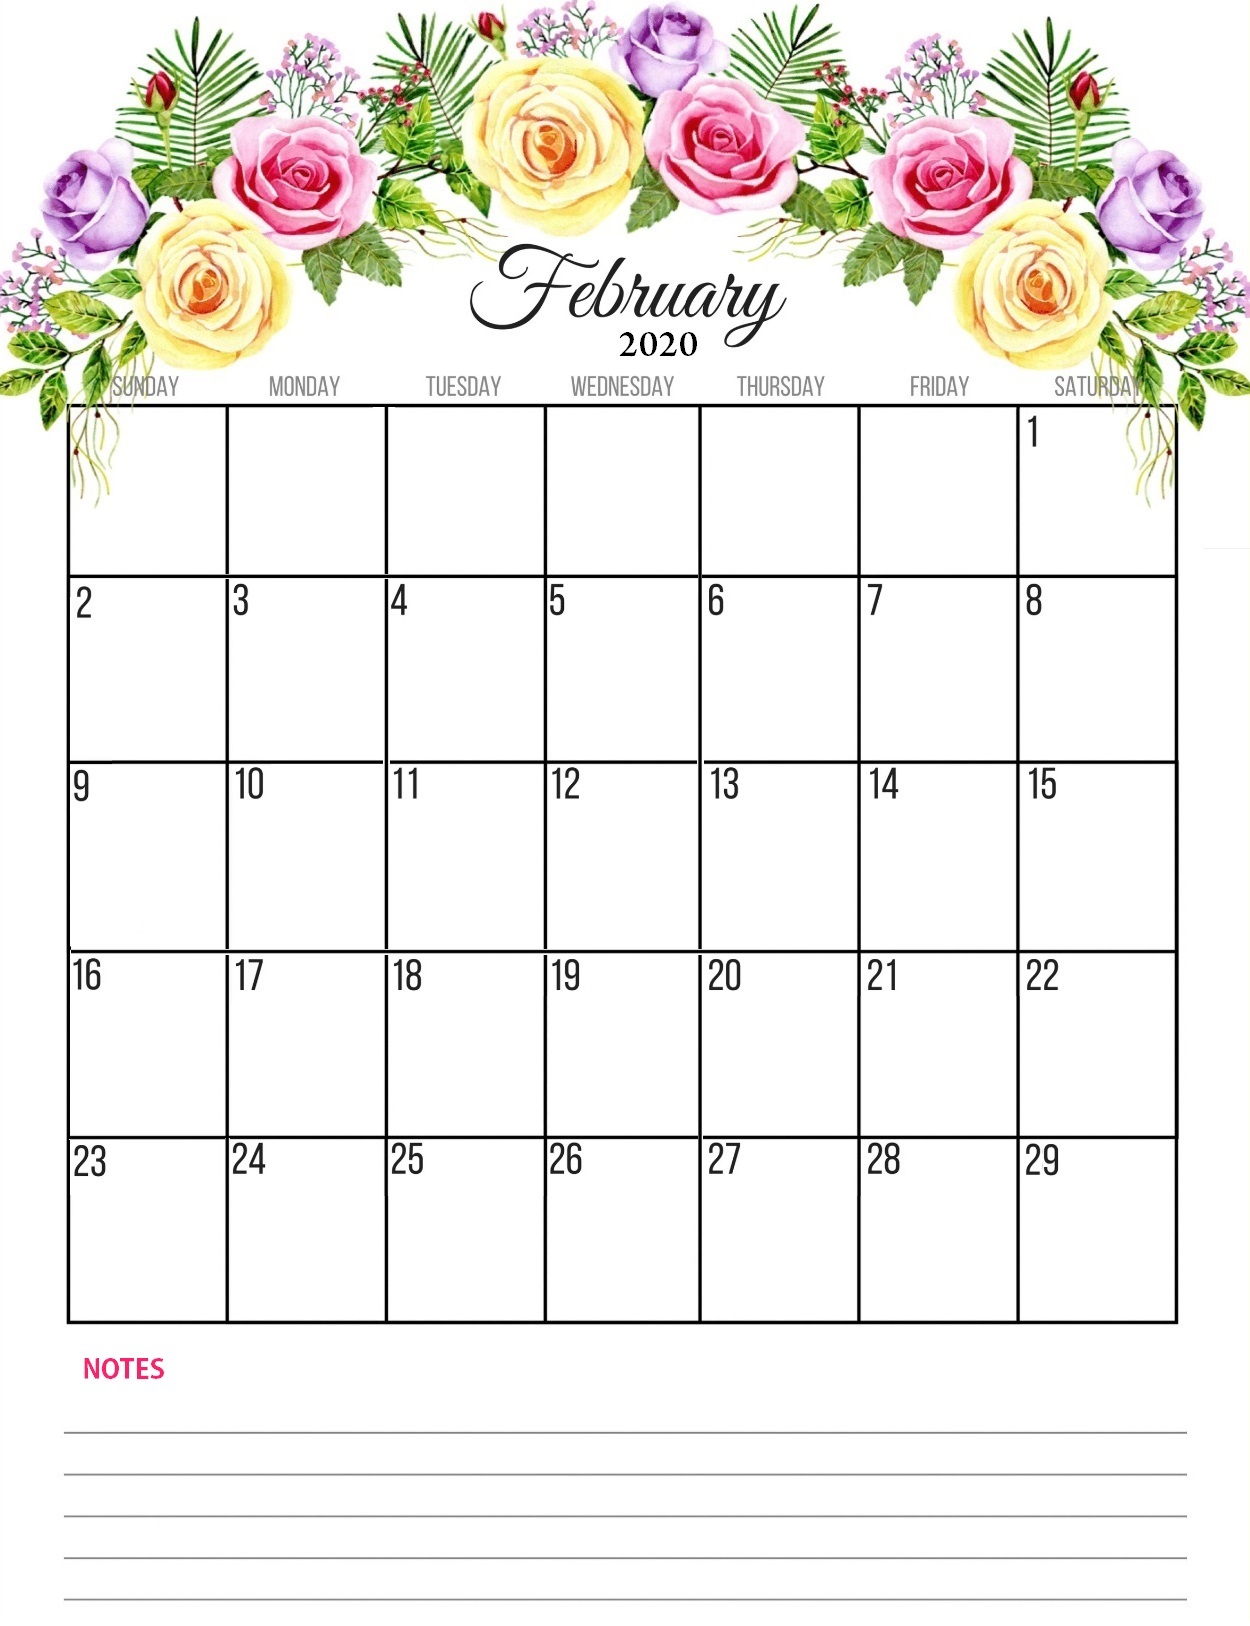 February 2020 Calendar Cute